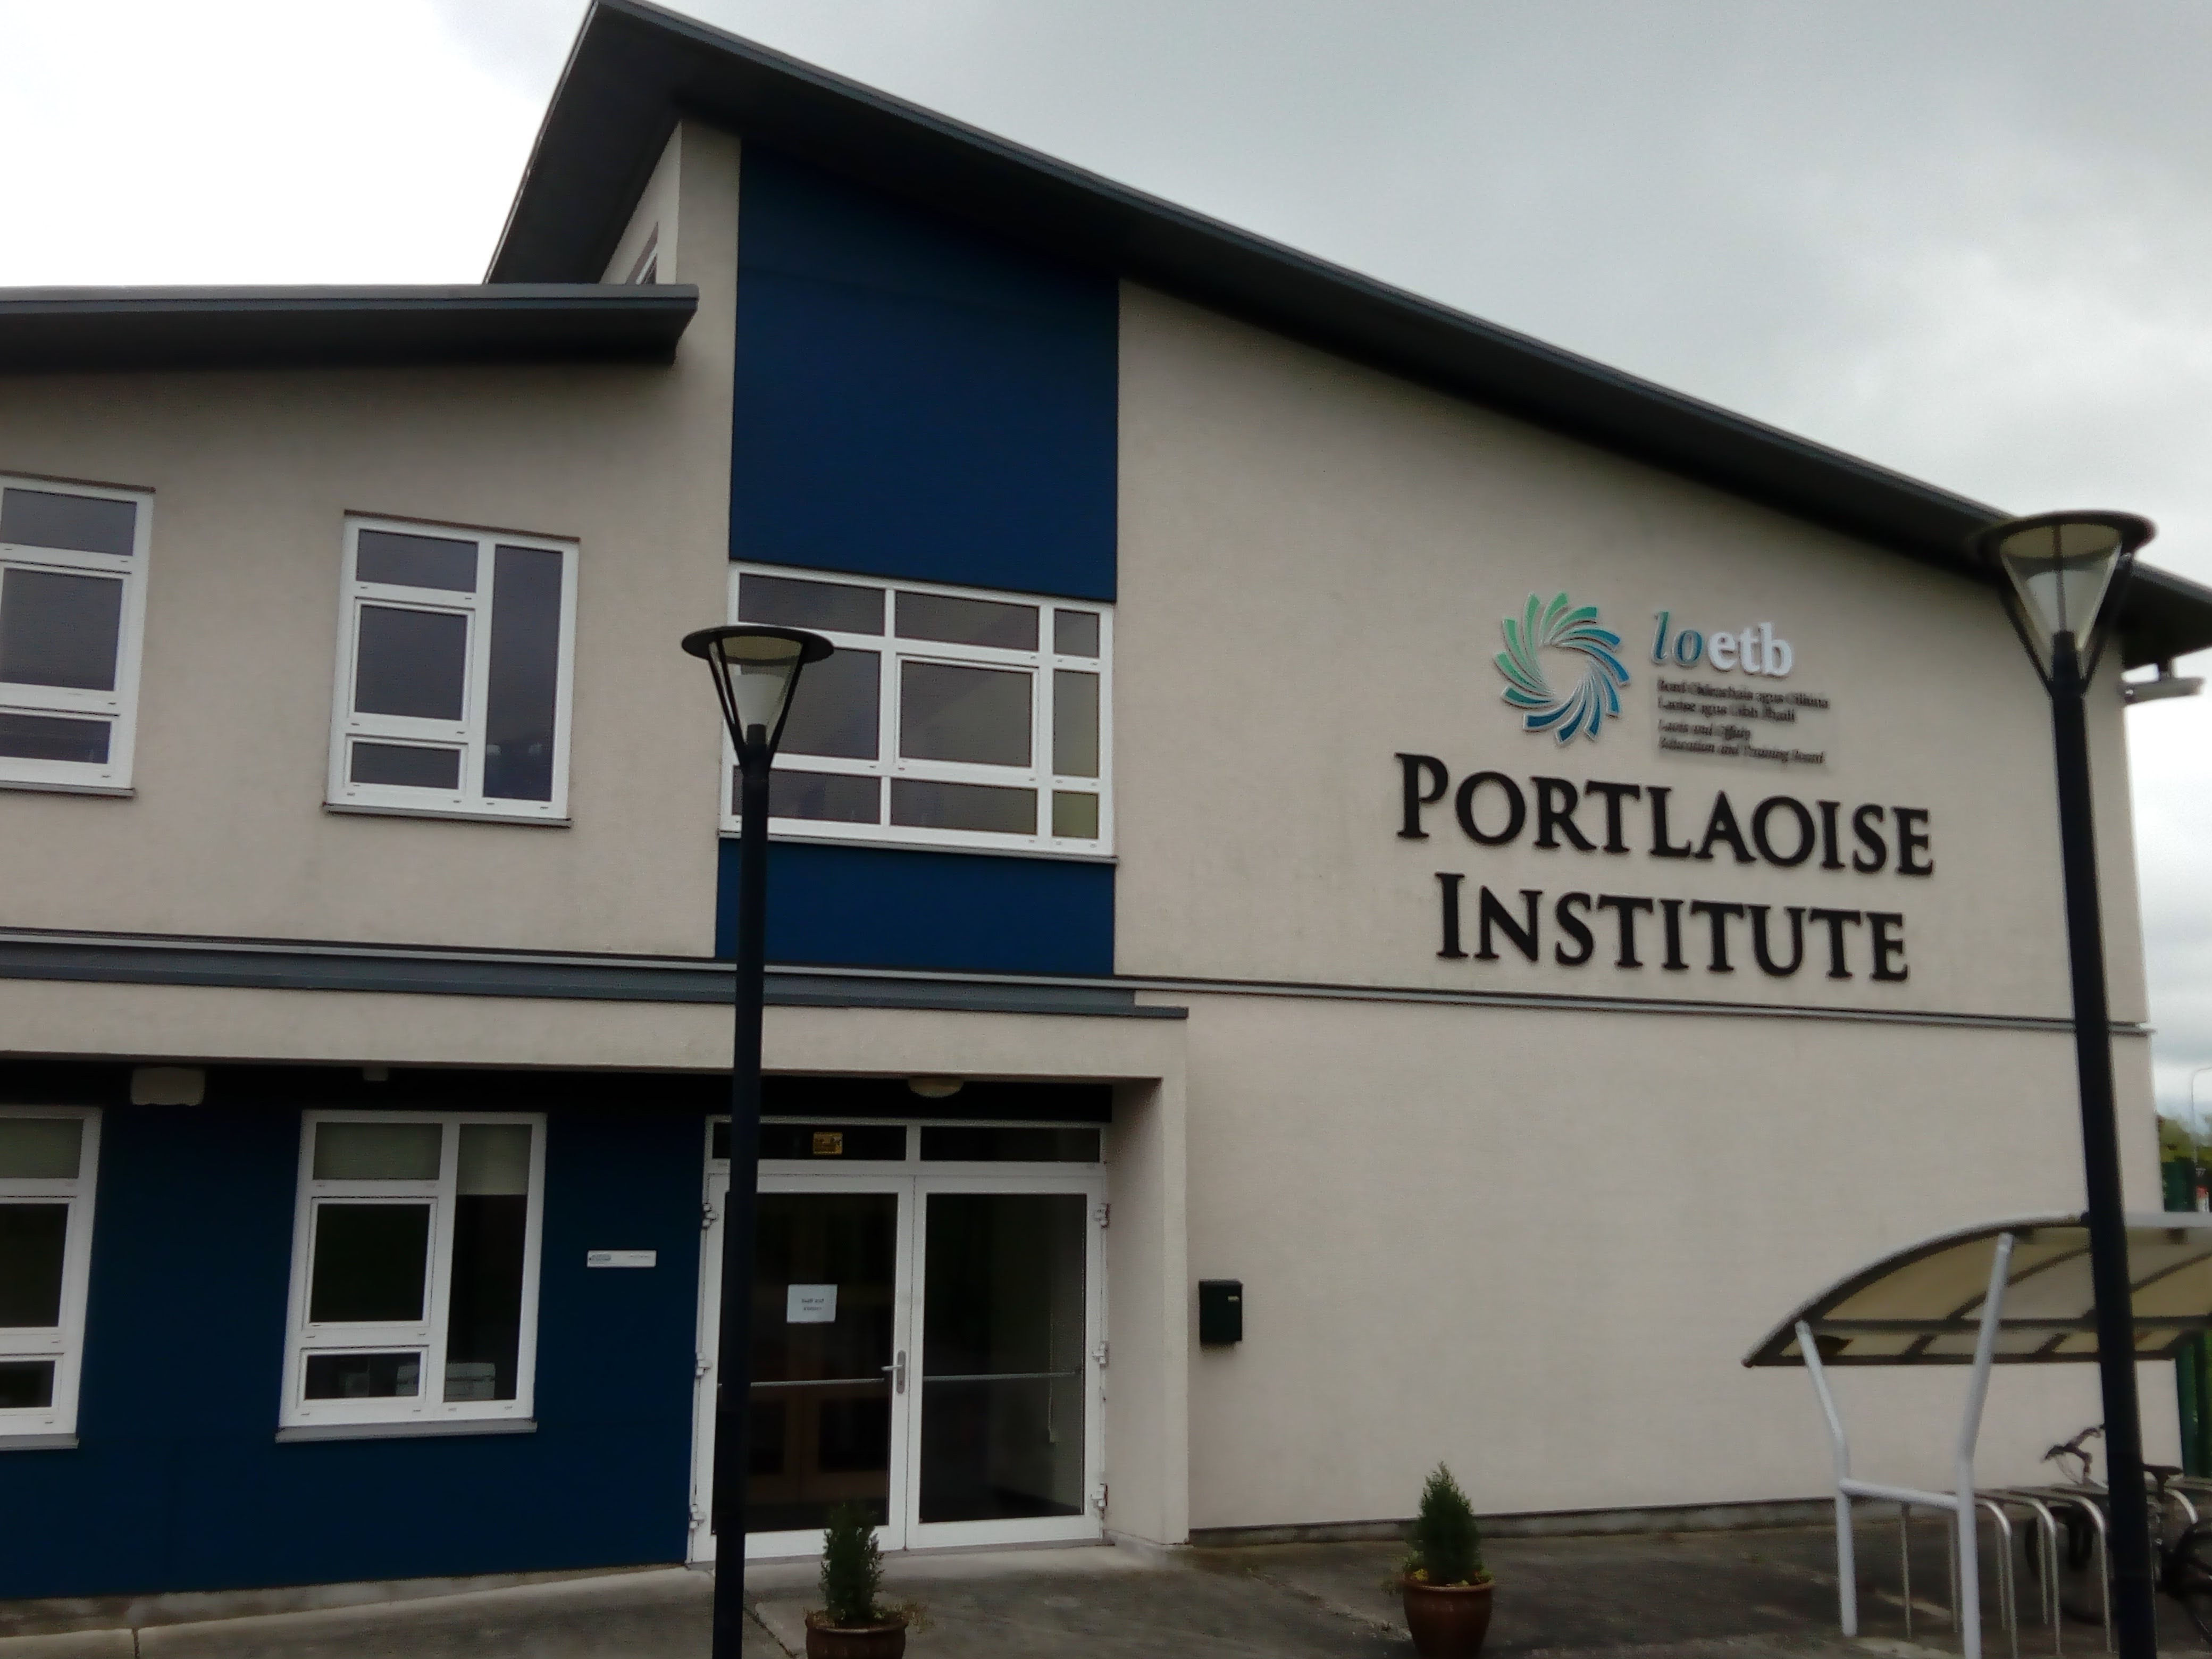 further education portlaoise